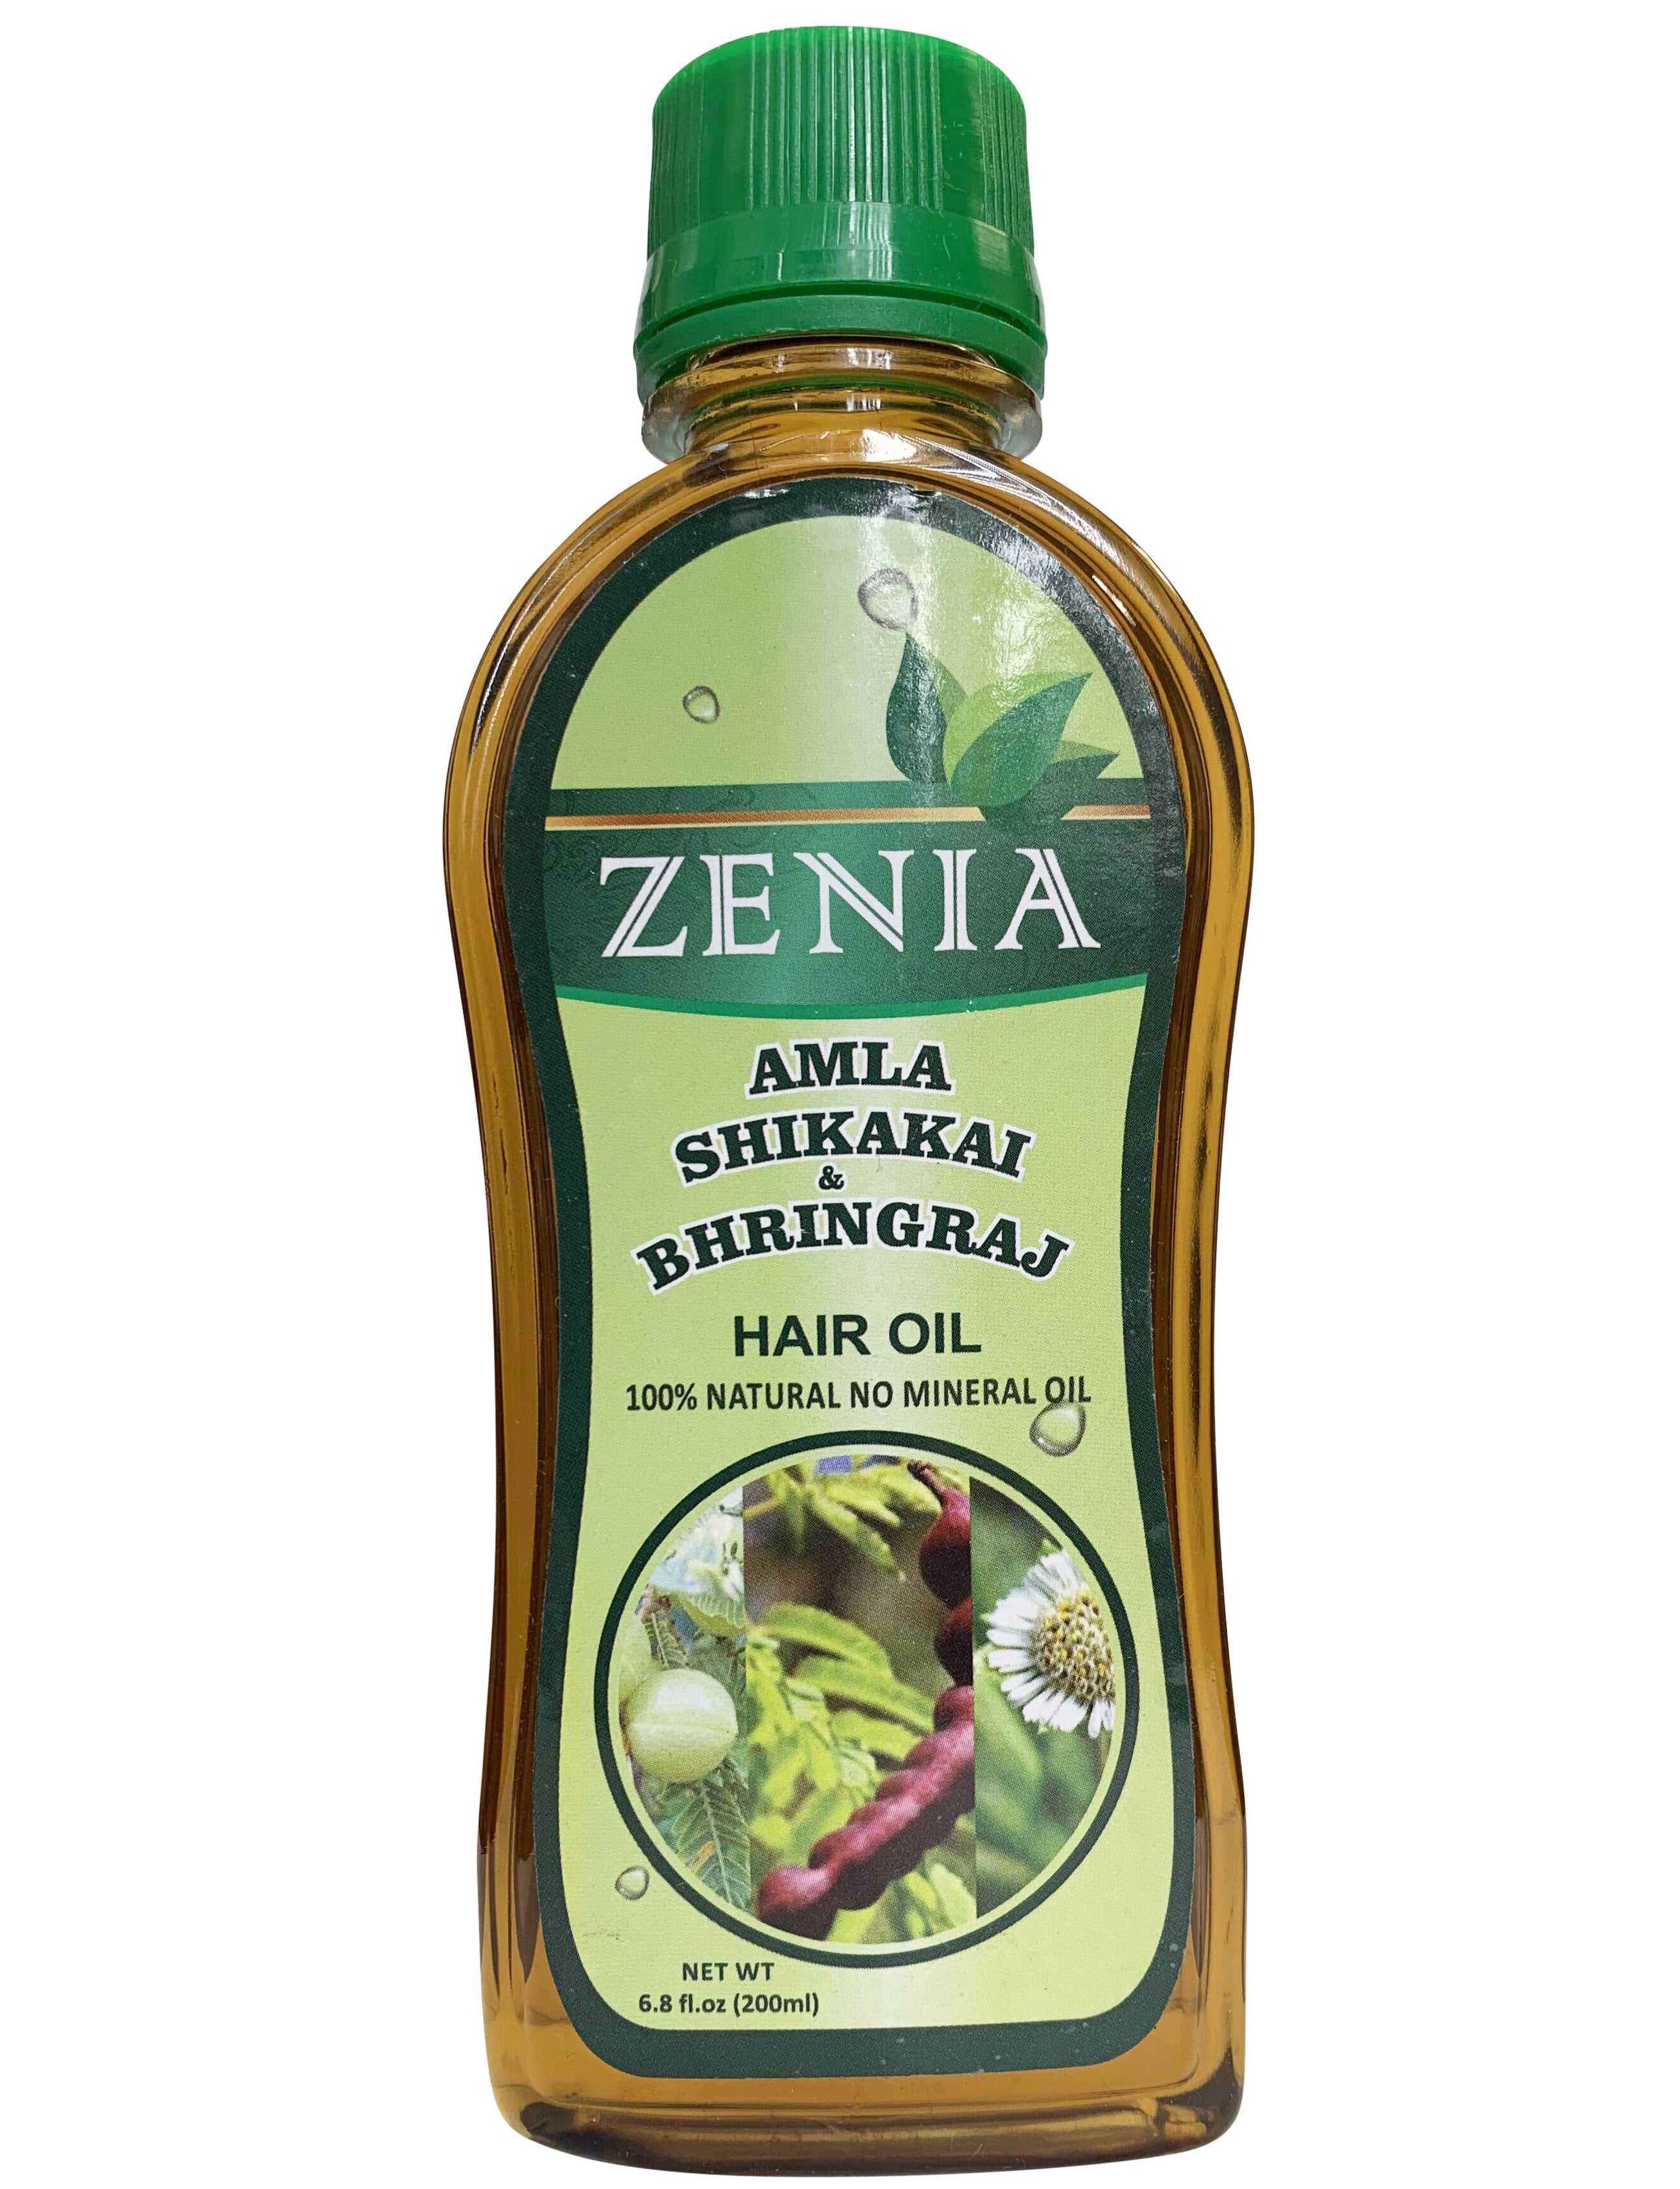 Zenia Amla Shikakai Bhringraj Hair Oil 100% Natural No Mineral Oil 200ml